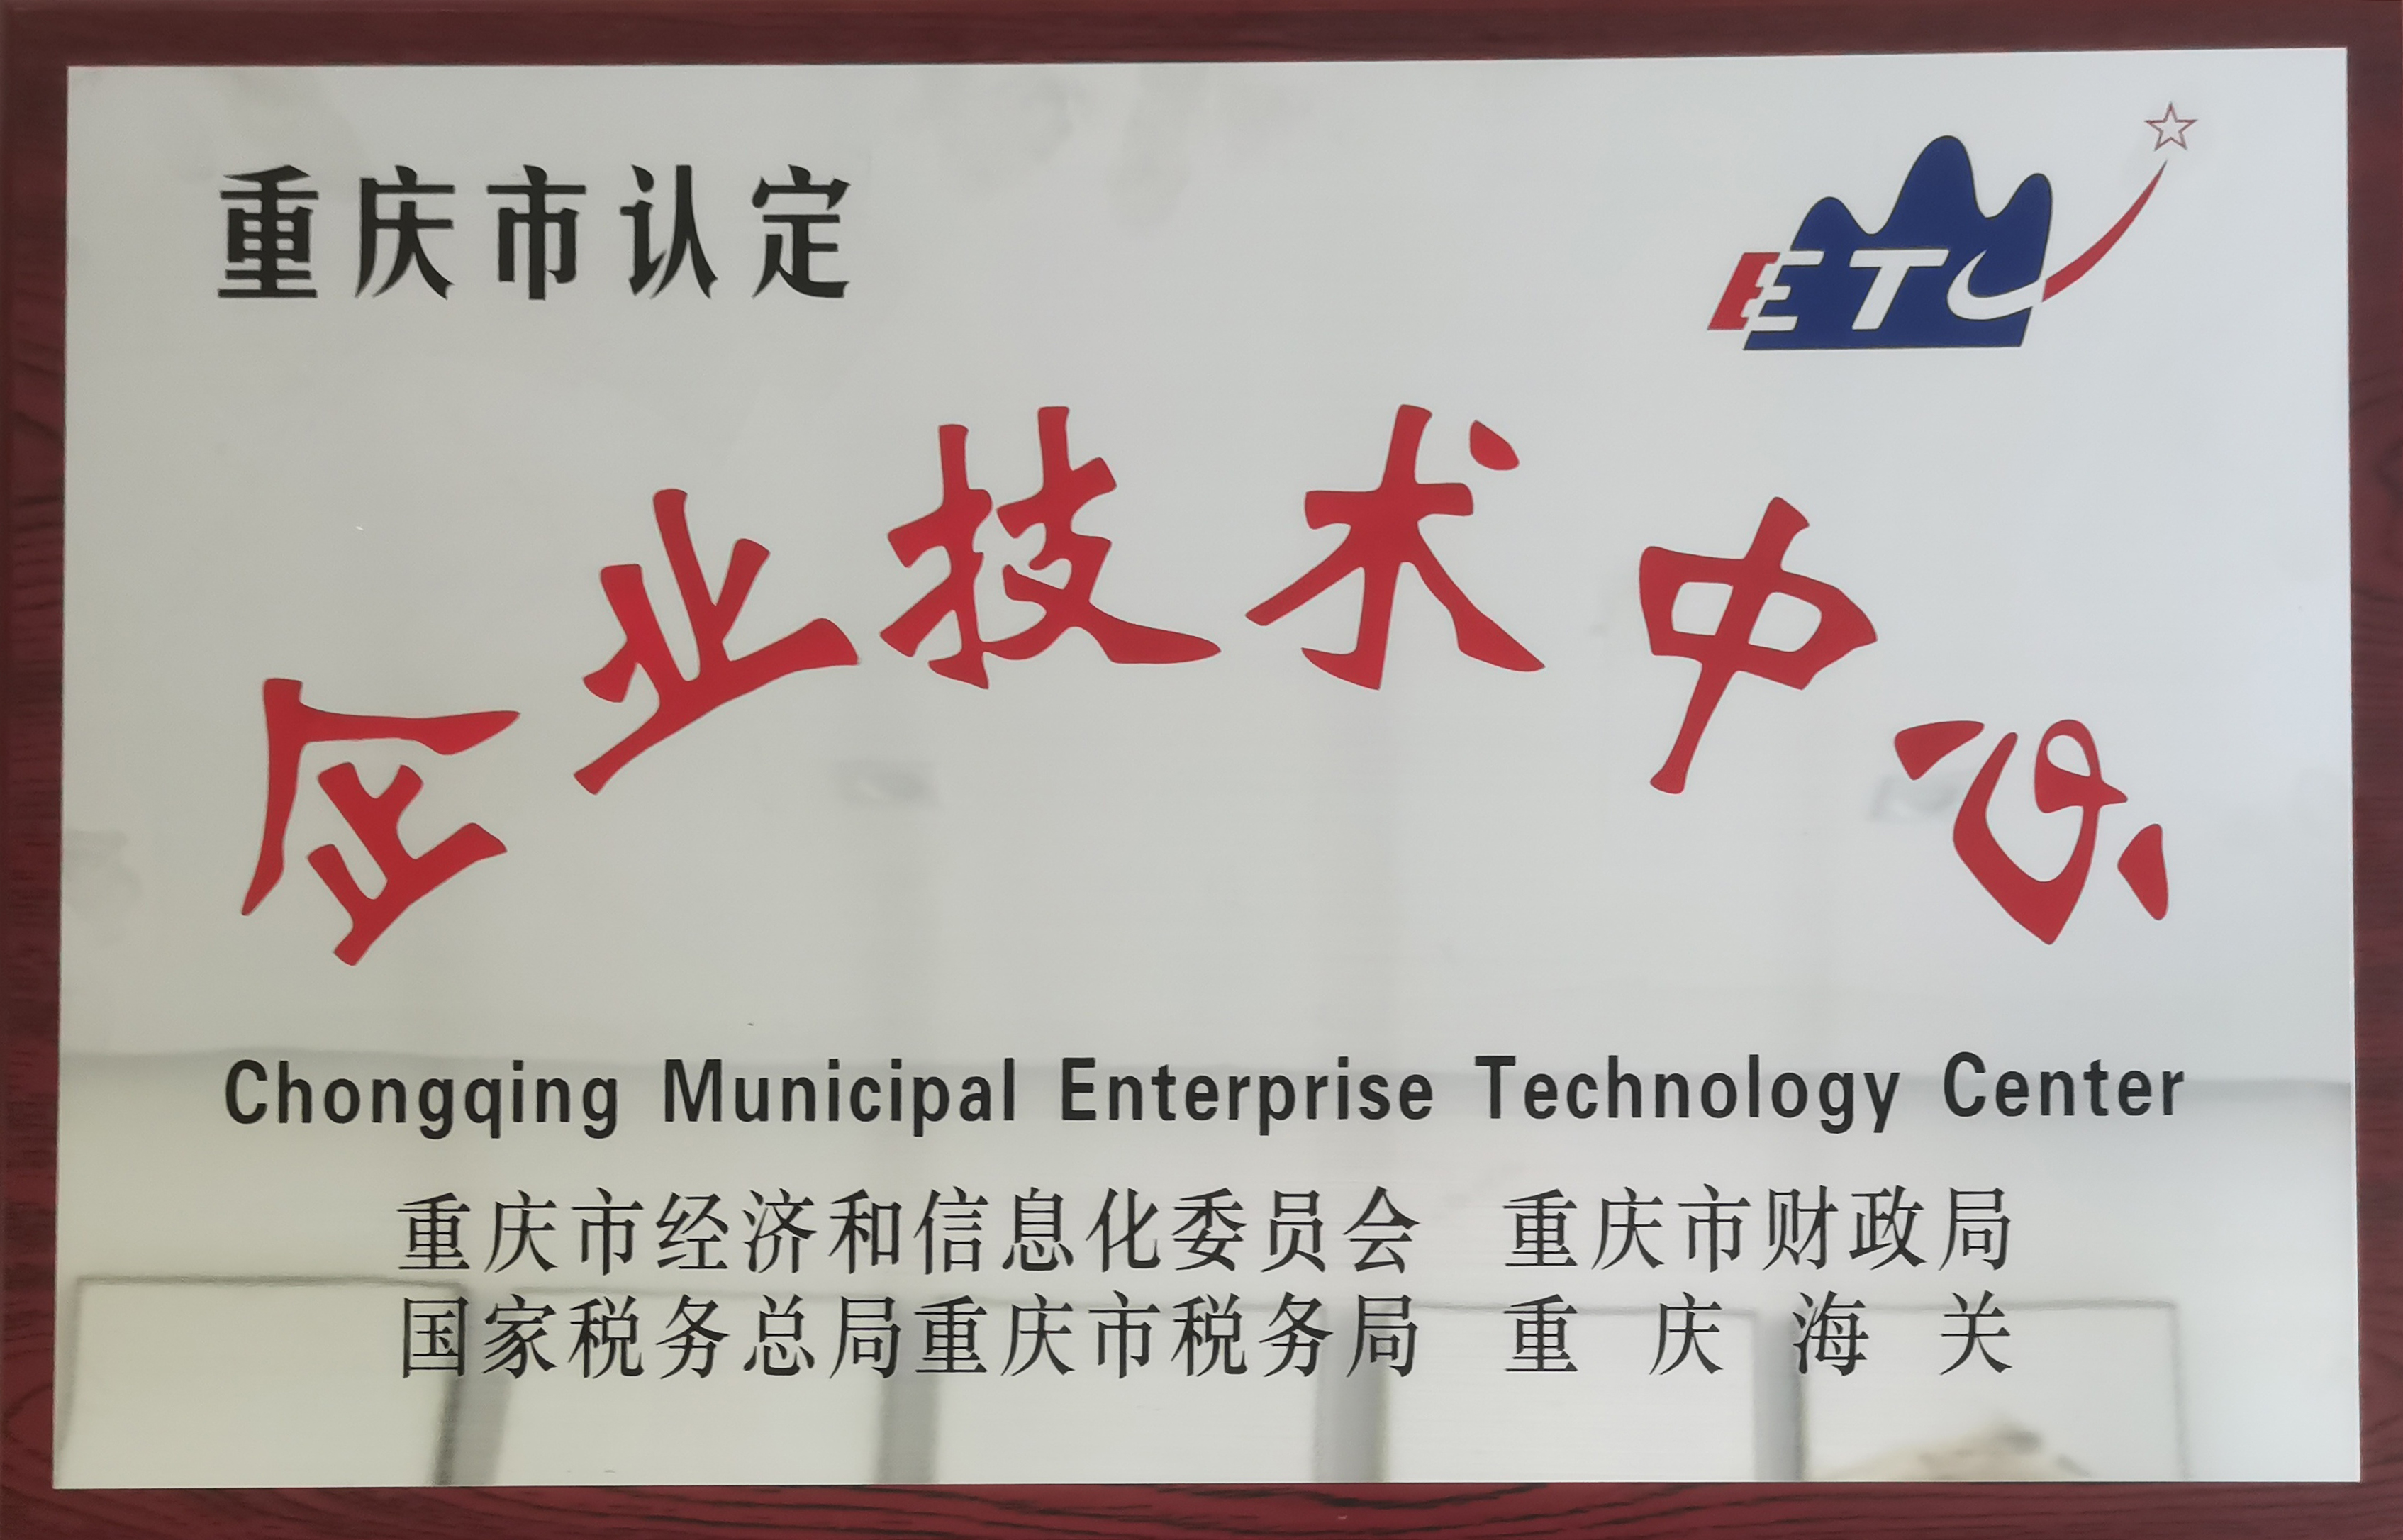 Enterprise Technology Center